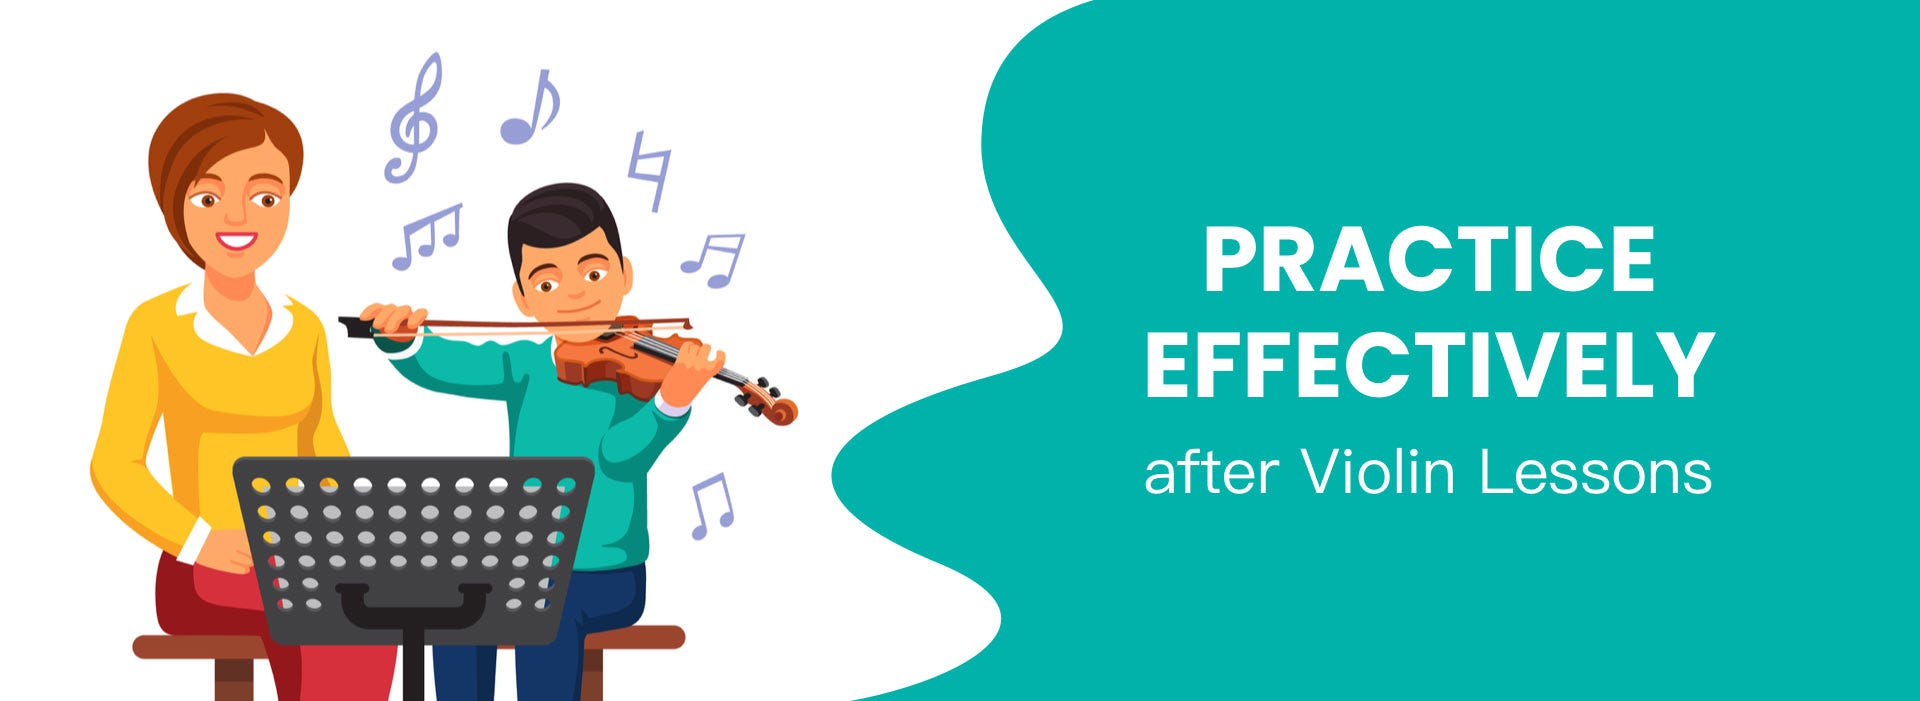 Practice Effectively after Violin Lessons | Violy Blog